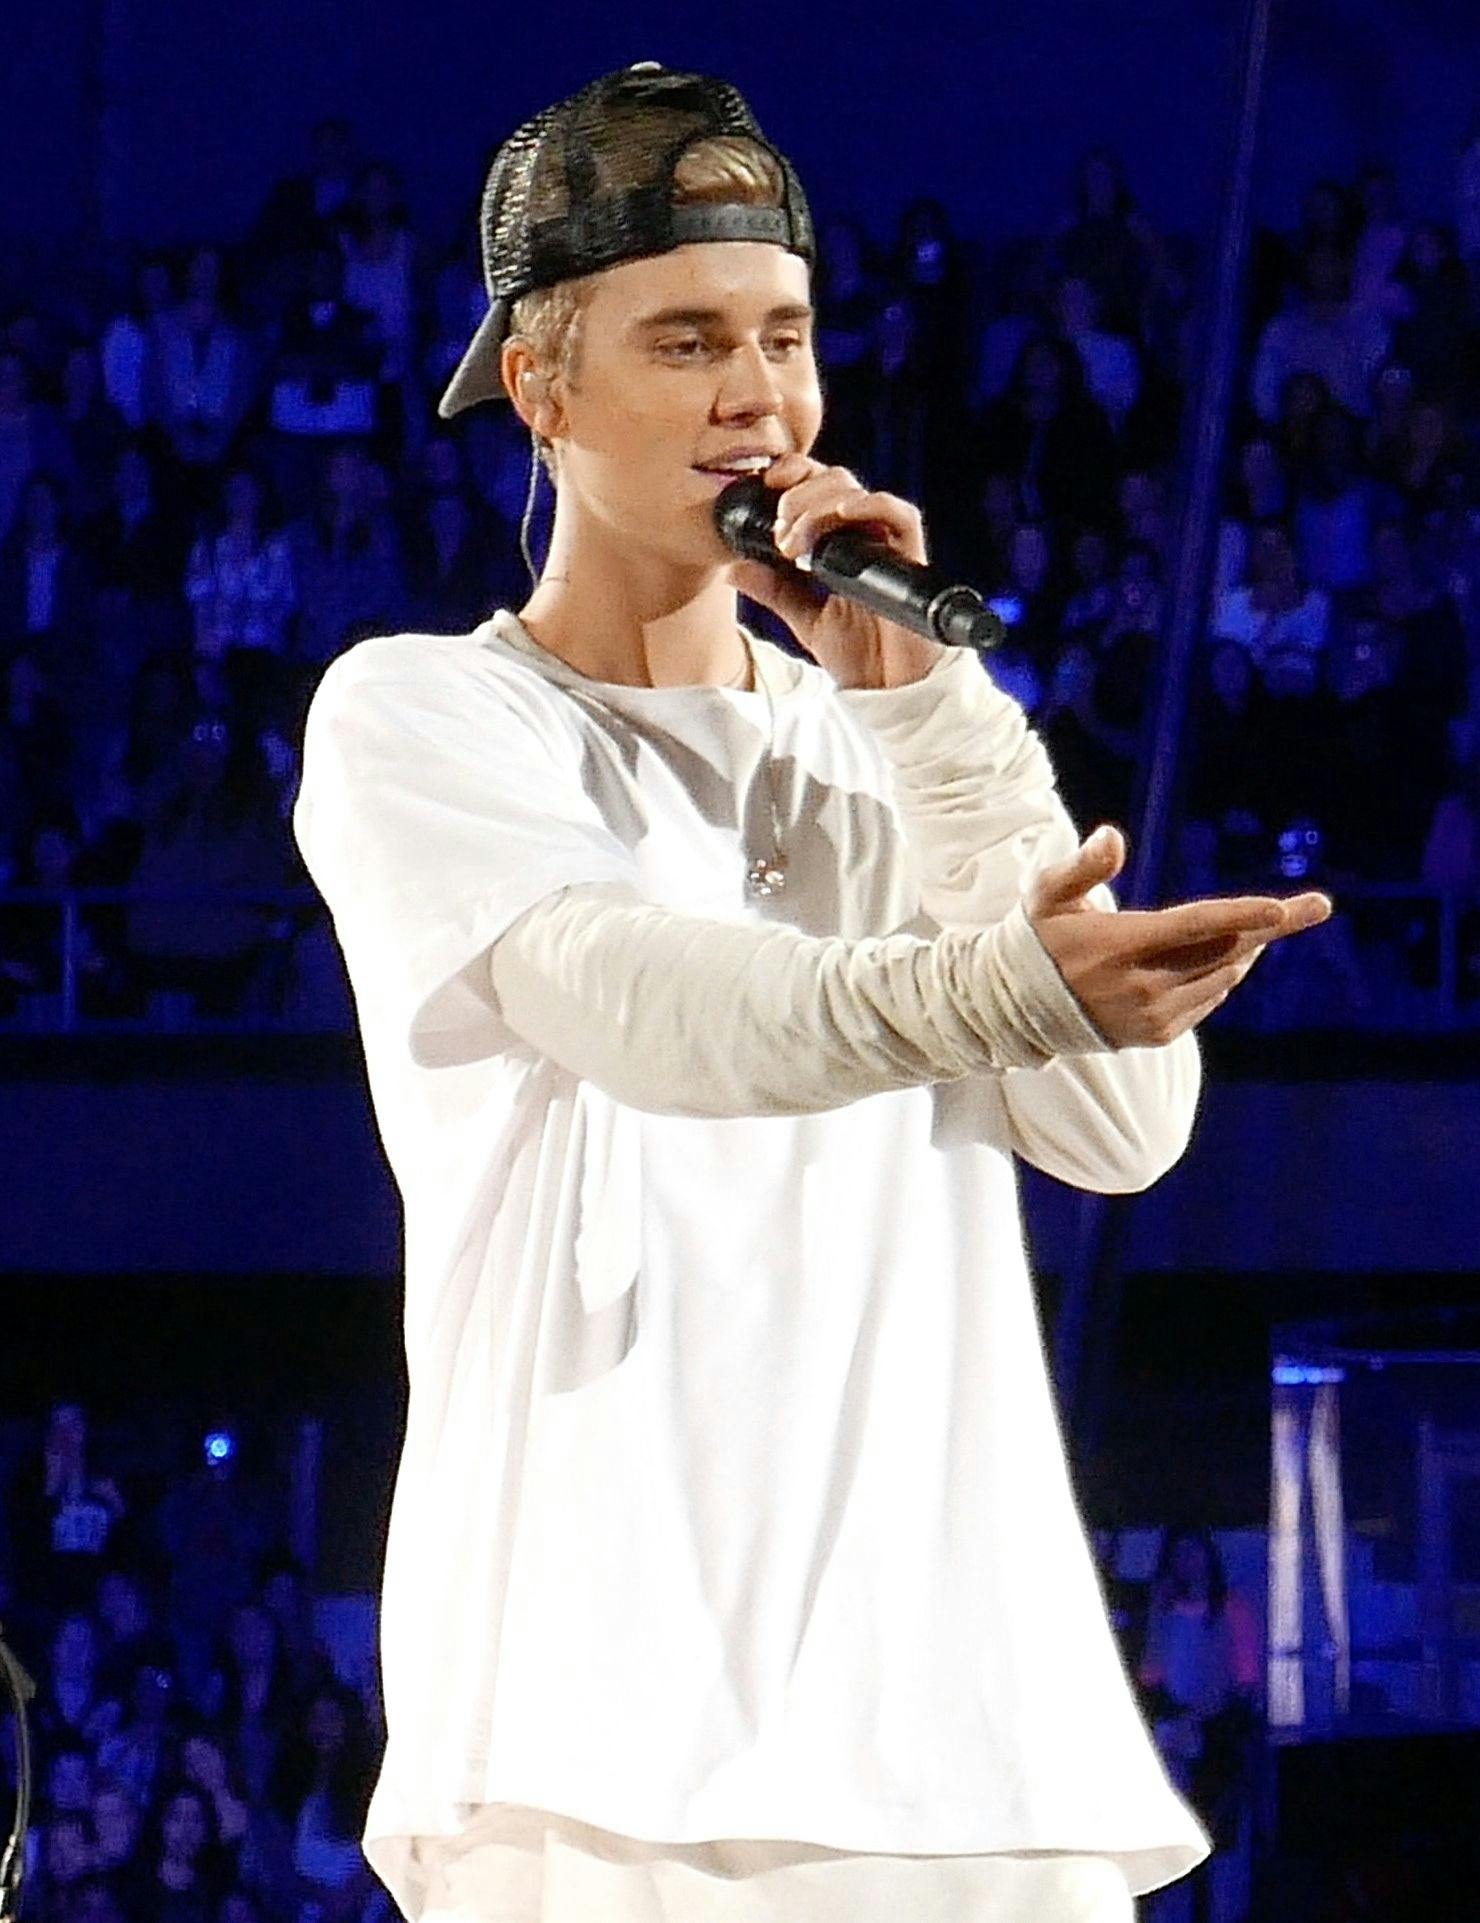 Justin Bieber verzet optreden na positieve coronatest